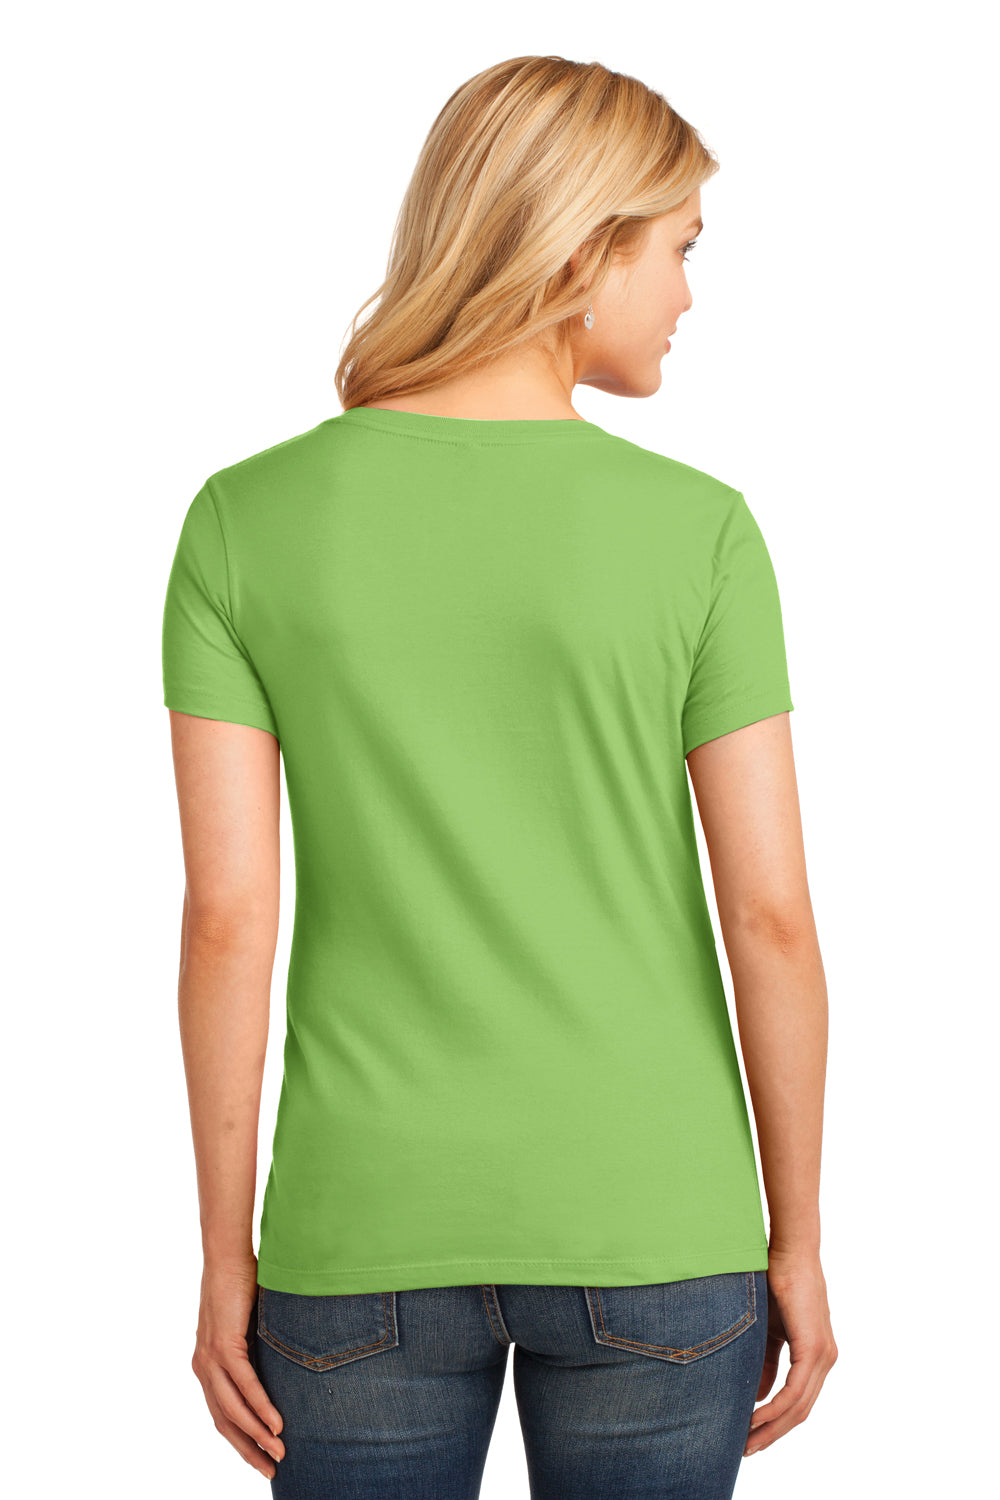 Port & Company LPC54V Womens Core Short Sleeve V-Neck T-Shirt Lime Green Back